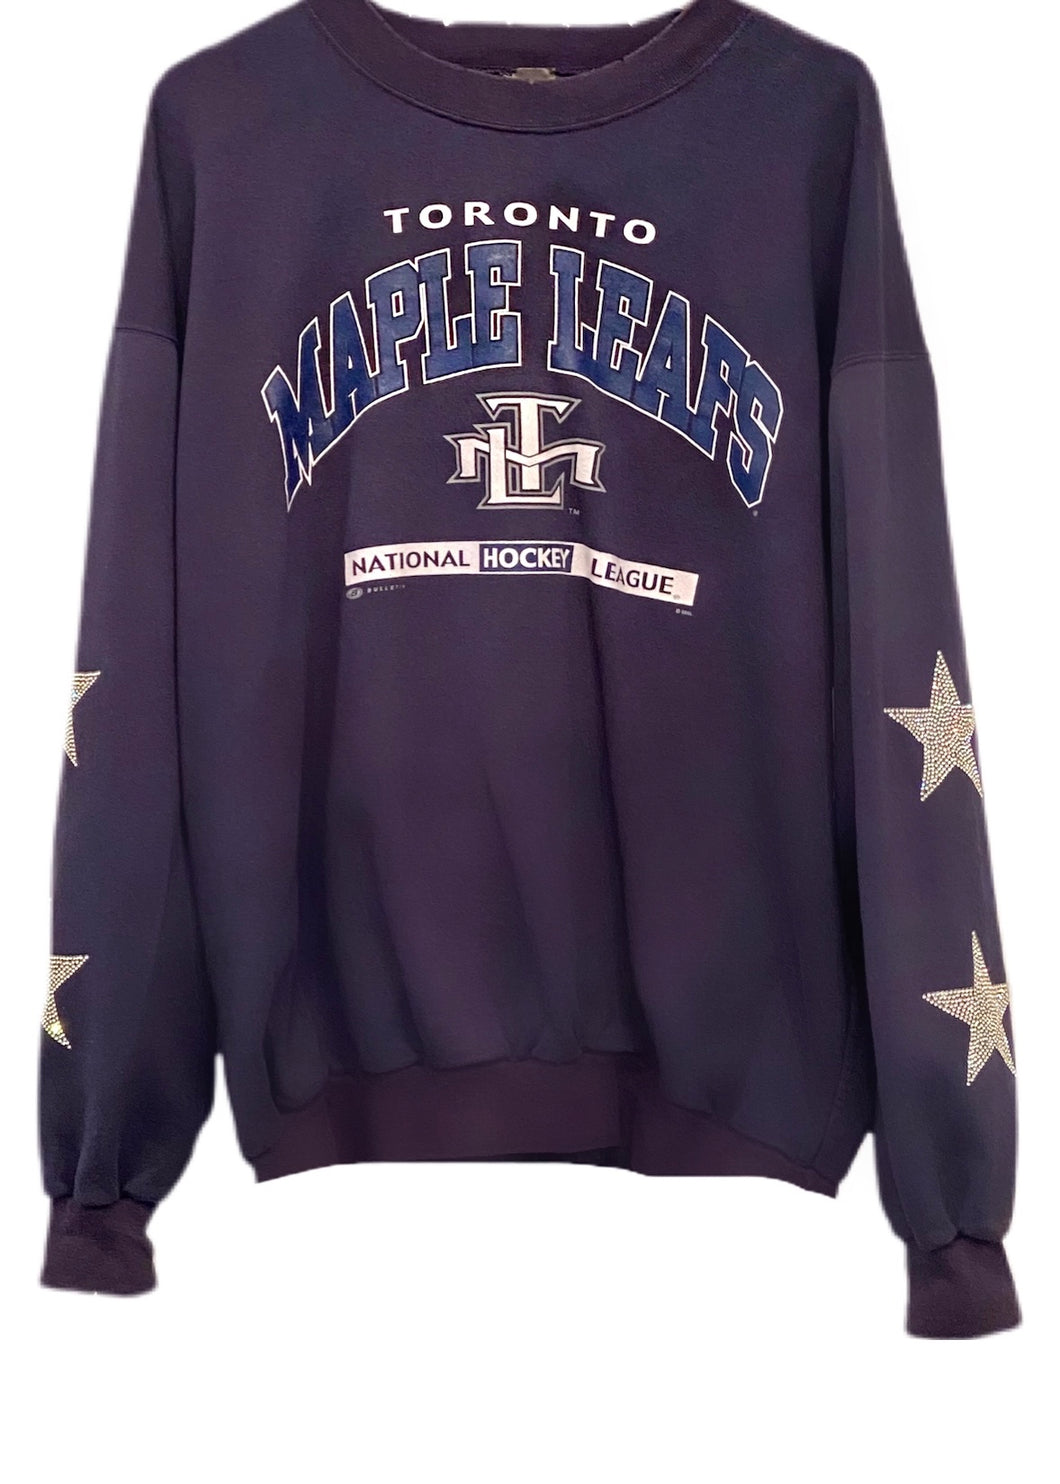 Toronto Maple Leafs, NHL One of a KIND Vintage Sweatshirt with Crystal Stars Design